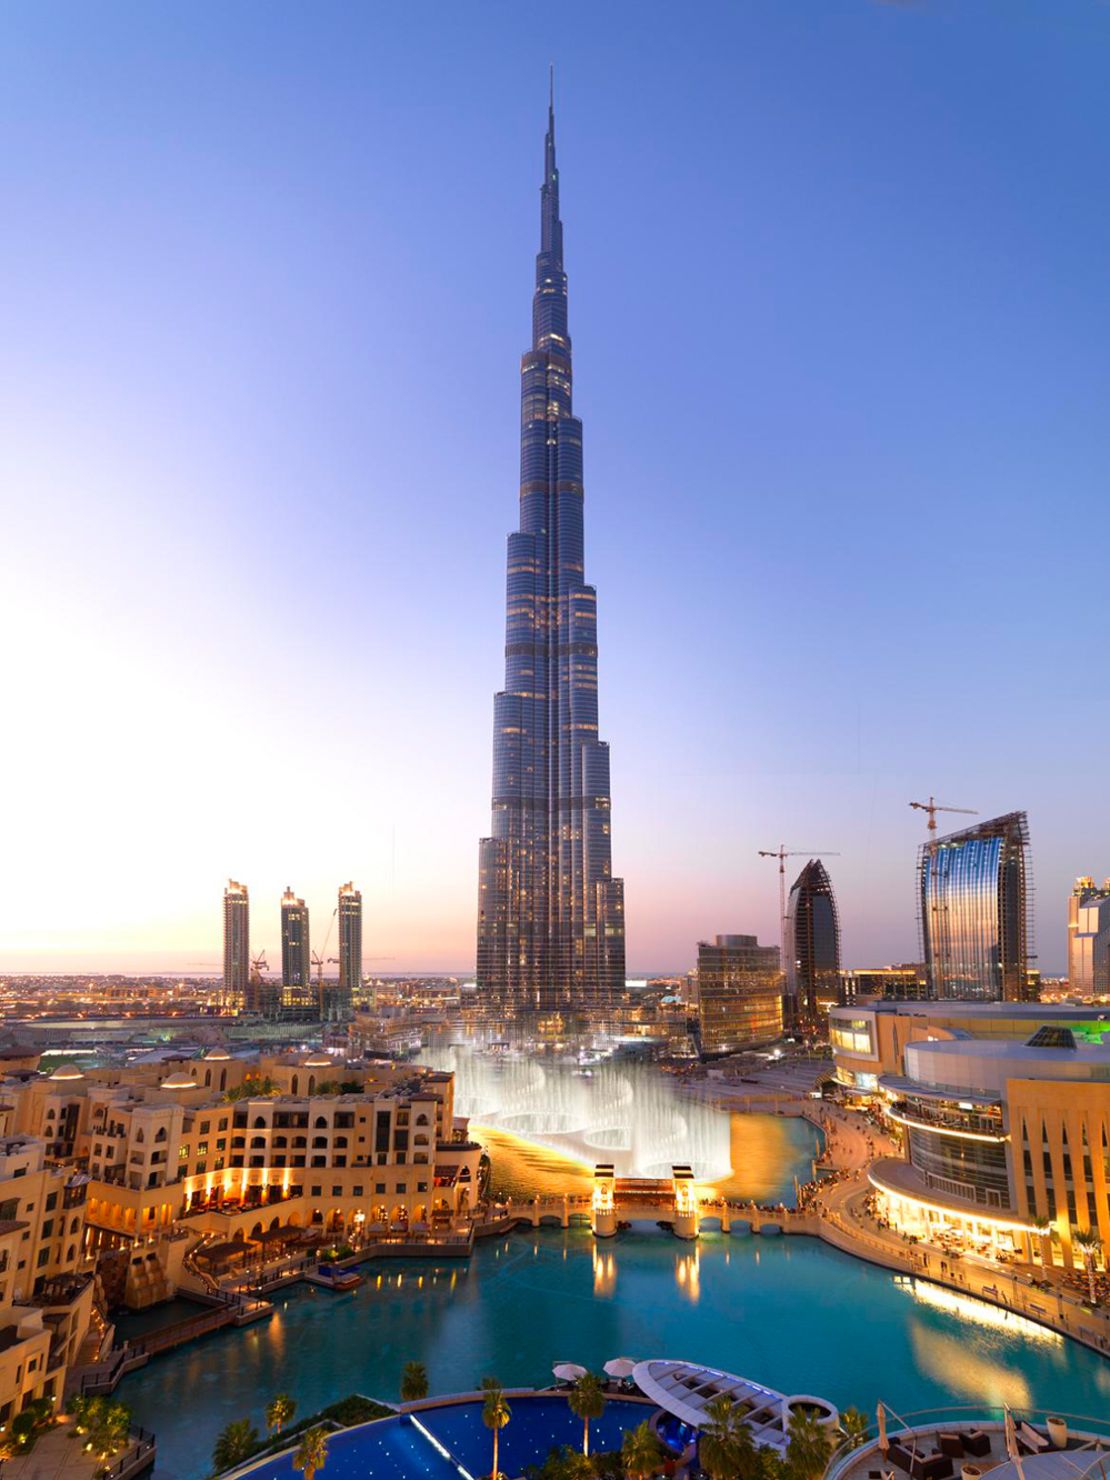 Armani Hotel Dubai -- high fashion in the world's highest building.